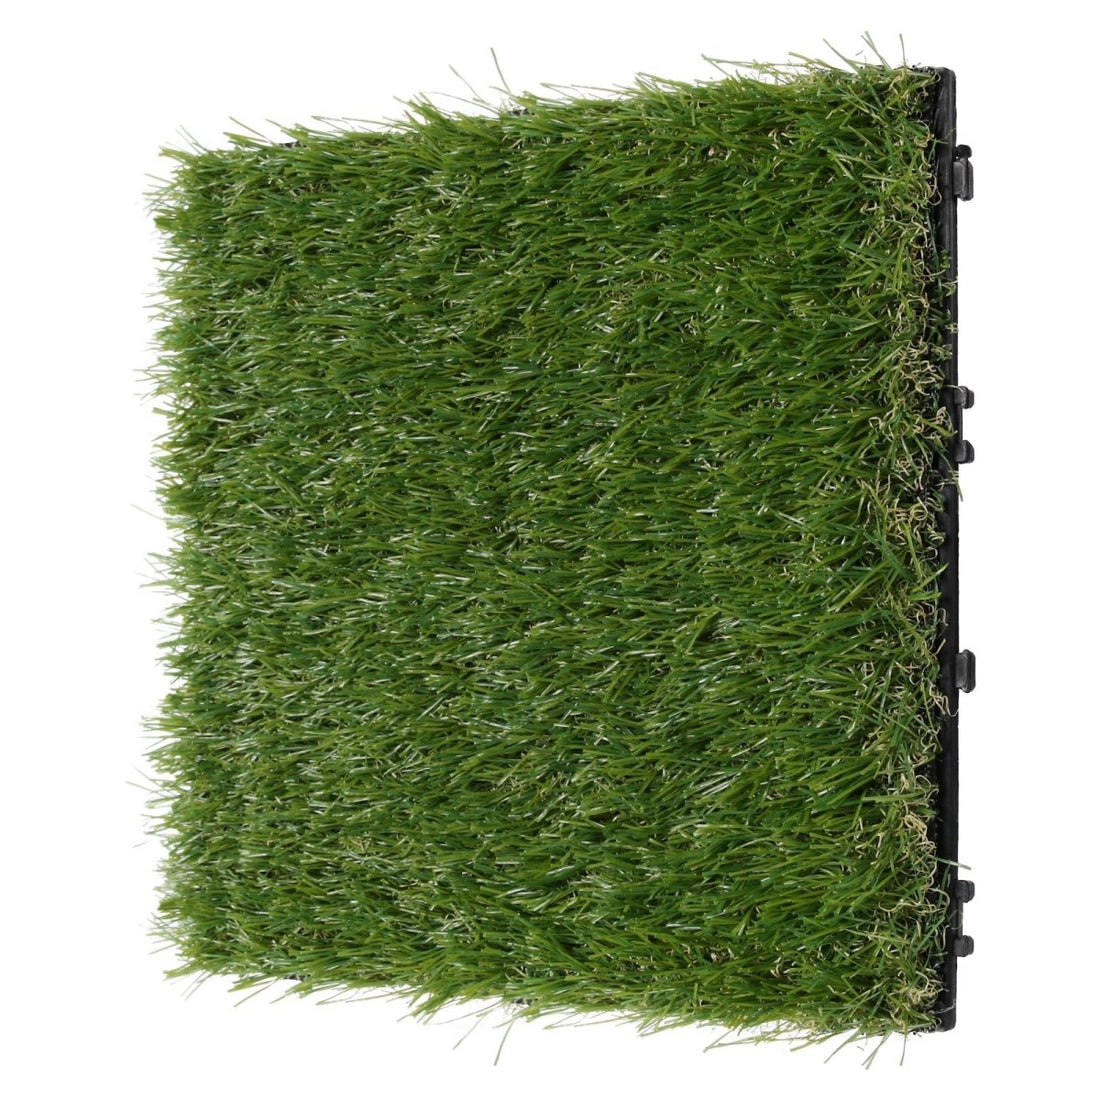 Lazy Tiles Grass Tile - Natural Green - Lazy Tiles